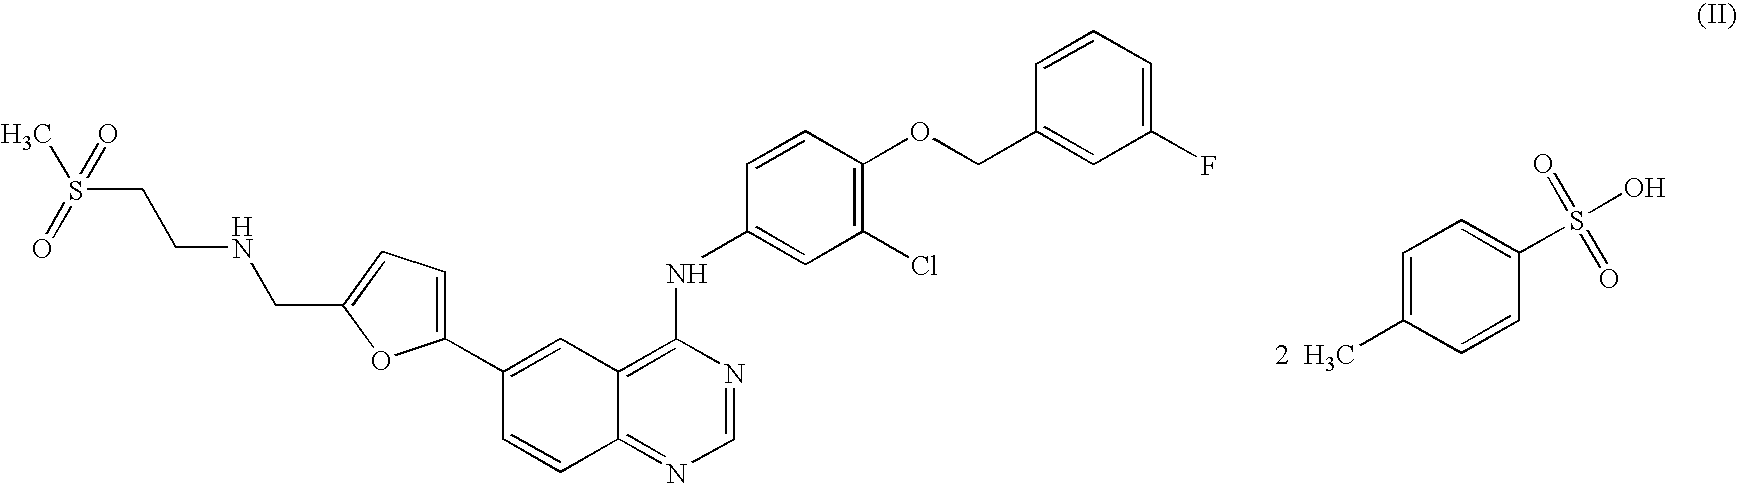 Quinazoline ditosylate salt compounds